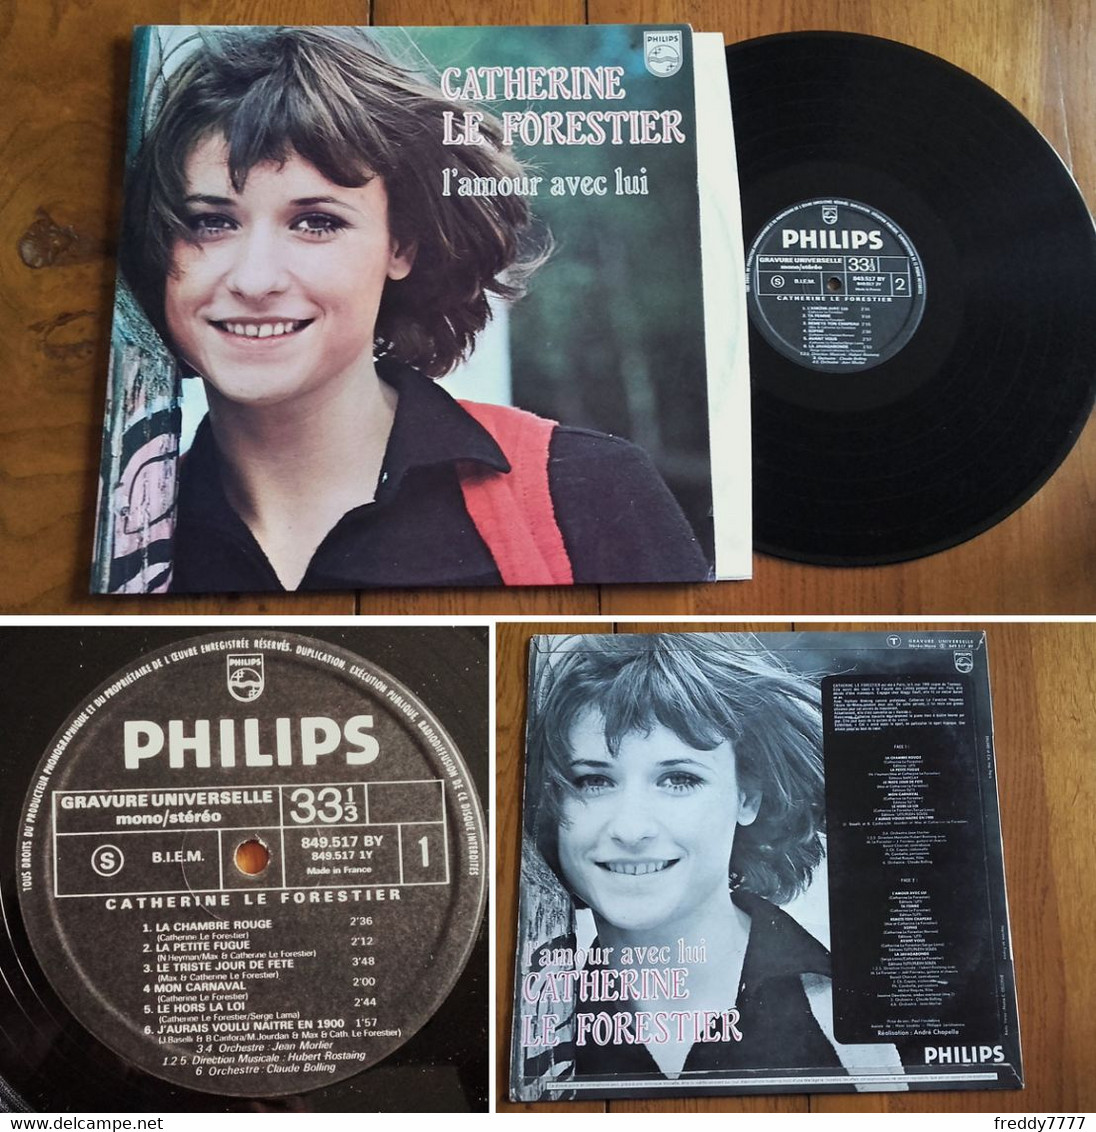 RARE French LP 33t RPM BIEM (12") CATHERINE LE FORESTIER (1969) - Collectors